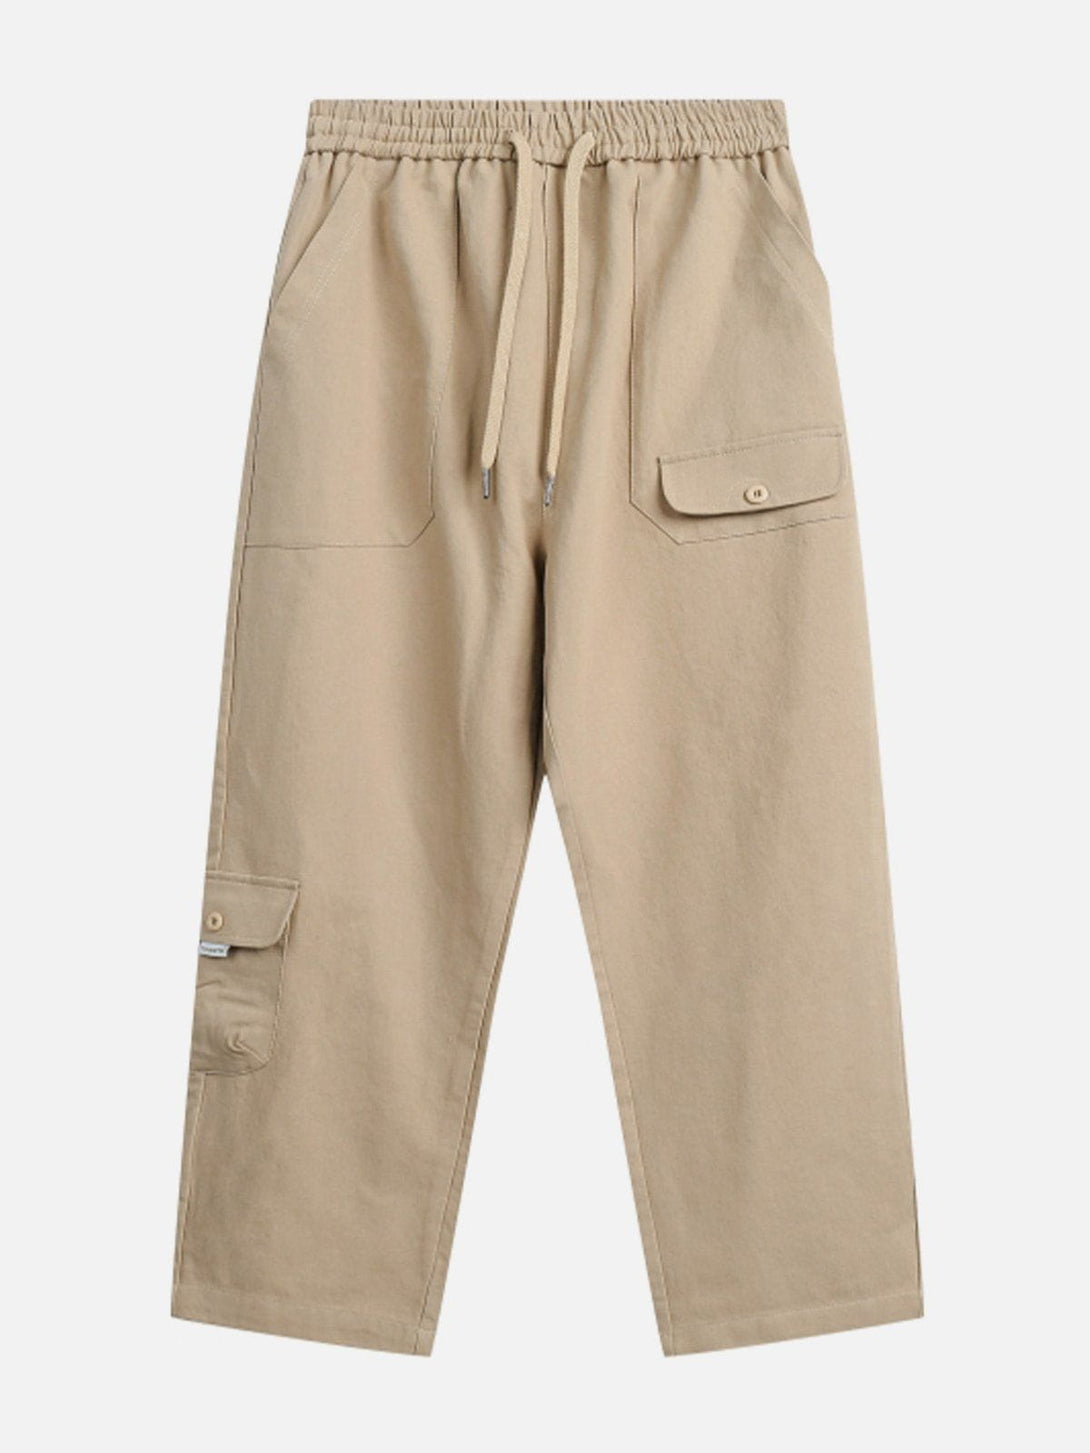 Majesda® - Irregular Pocket Design Cargo Pants outfit ideas streetwear fashion